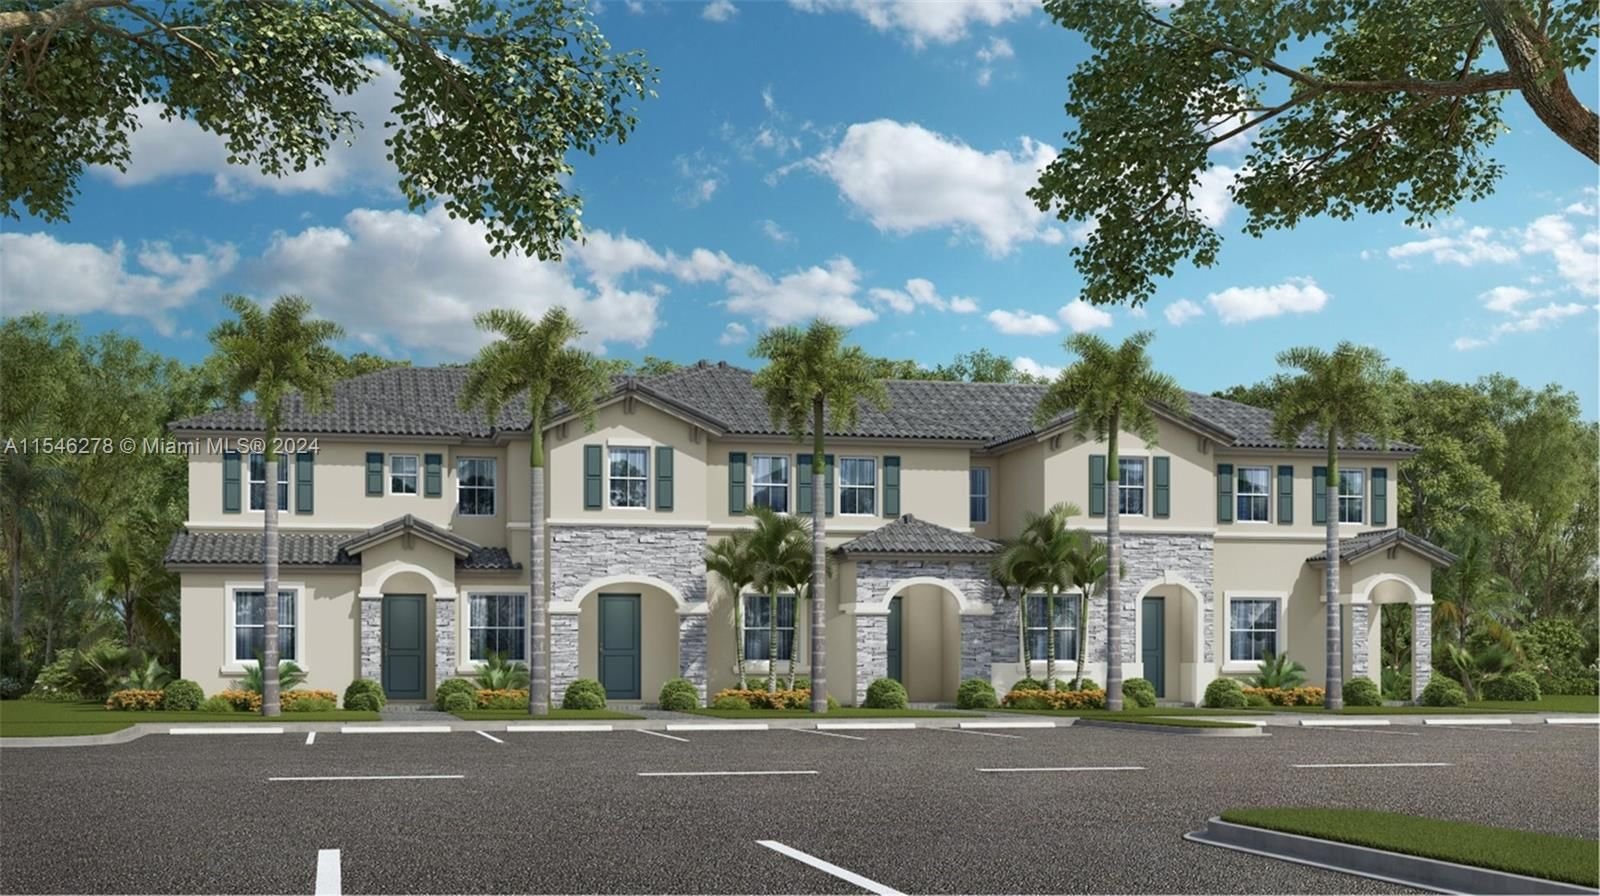 Real estate property located at 29275 163 ct, Miami-Dade County, Cedar Pointe, Homestead, FL